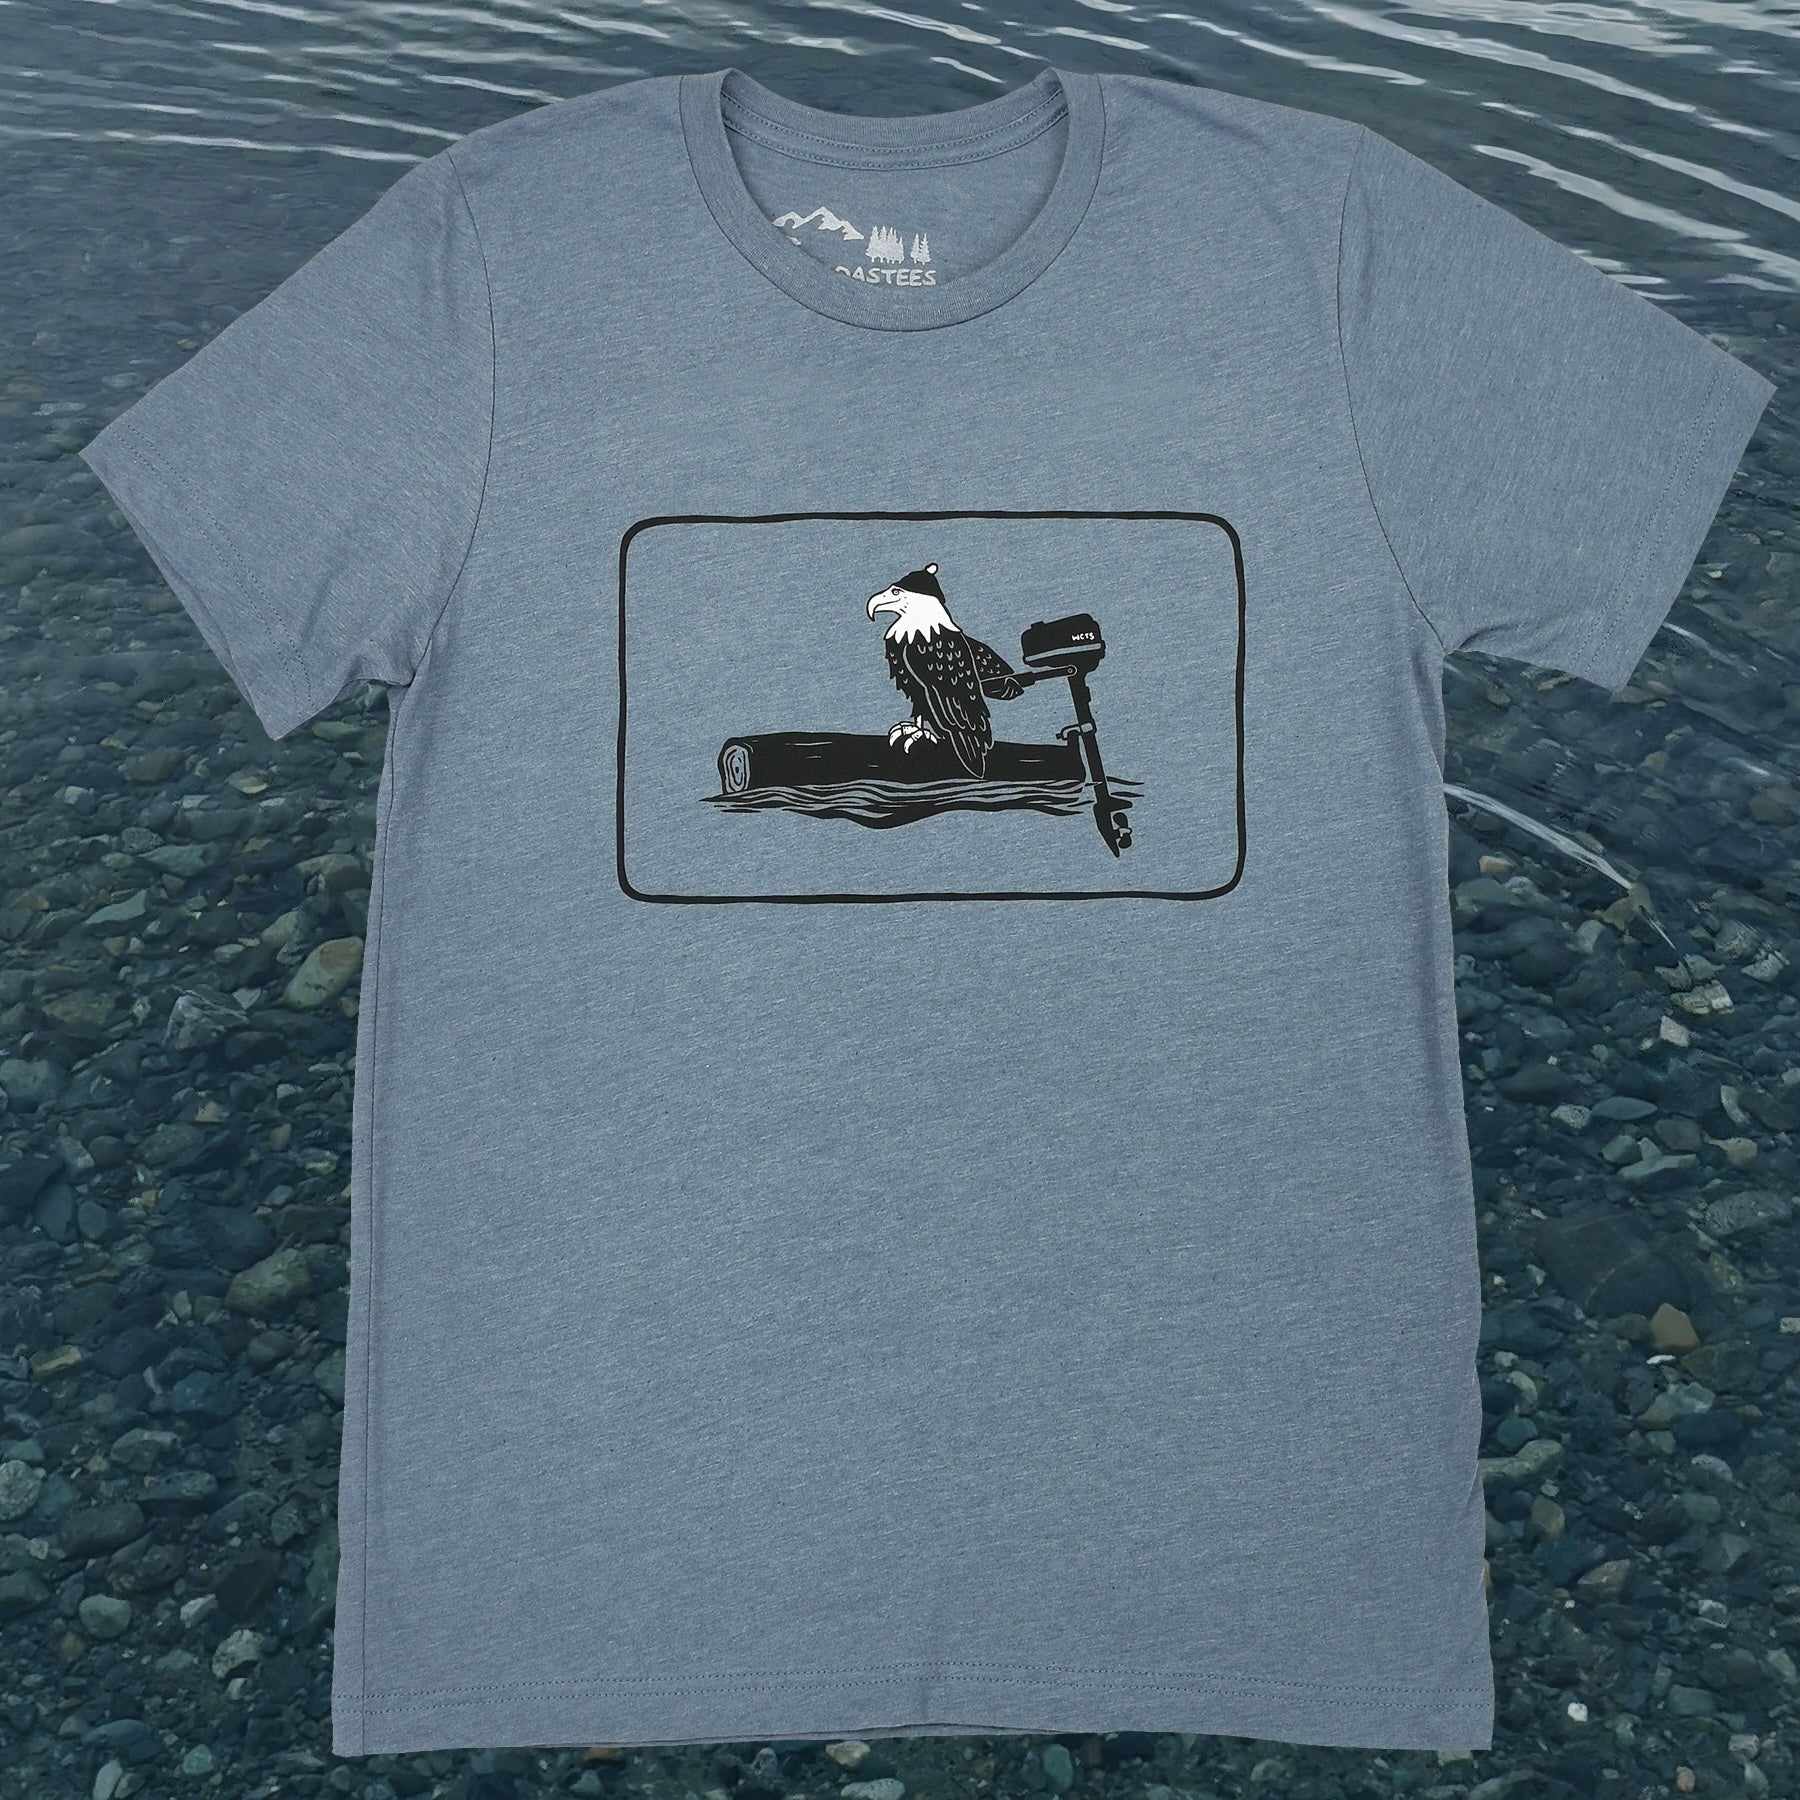 Westcoastees T-Shirt Fly Fishing Bear 3XL / Ocean Blue